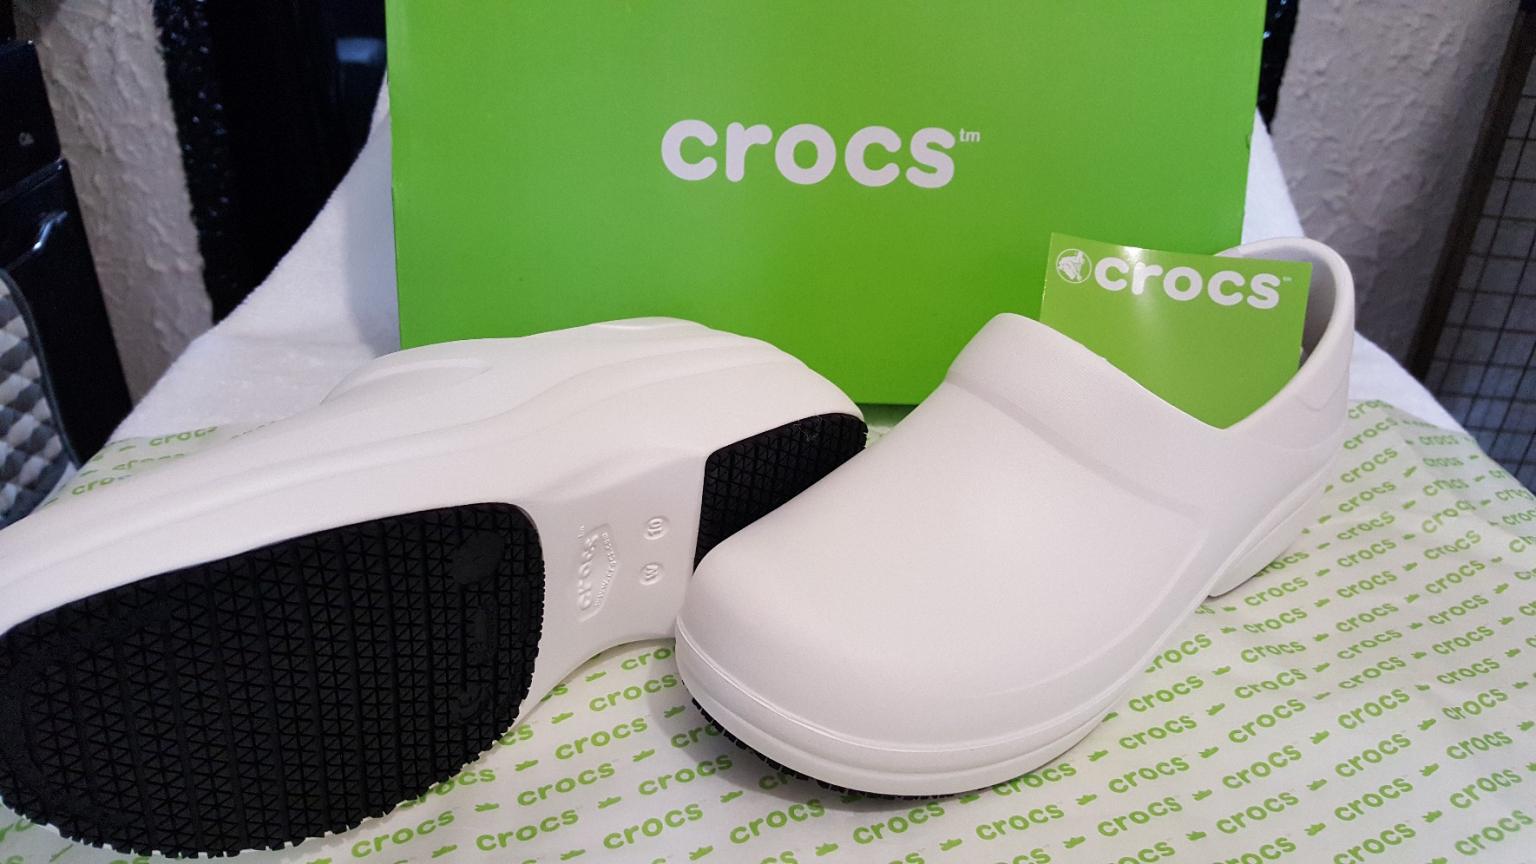 crocs 205788